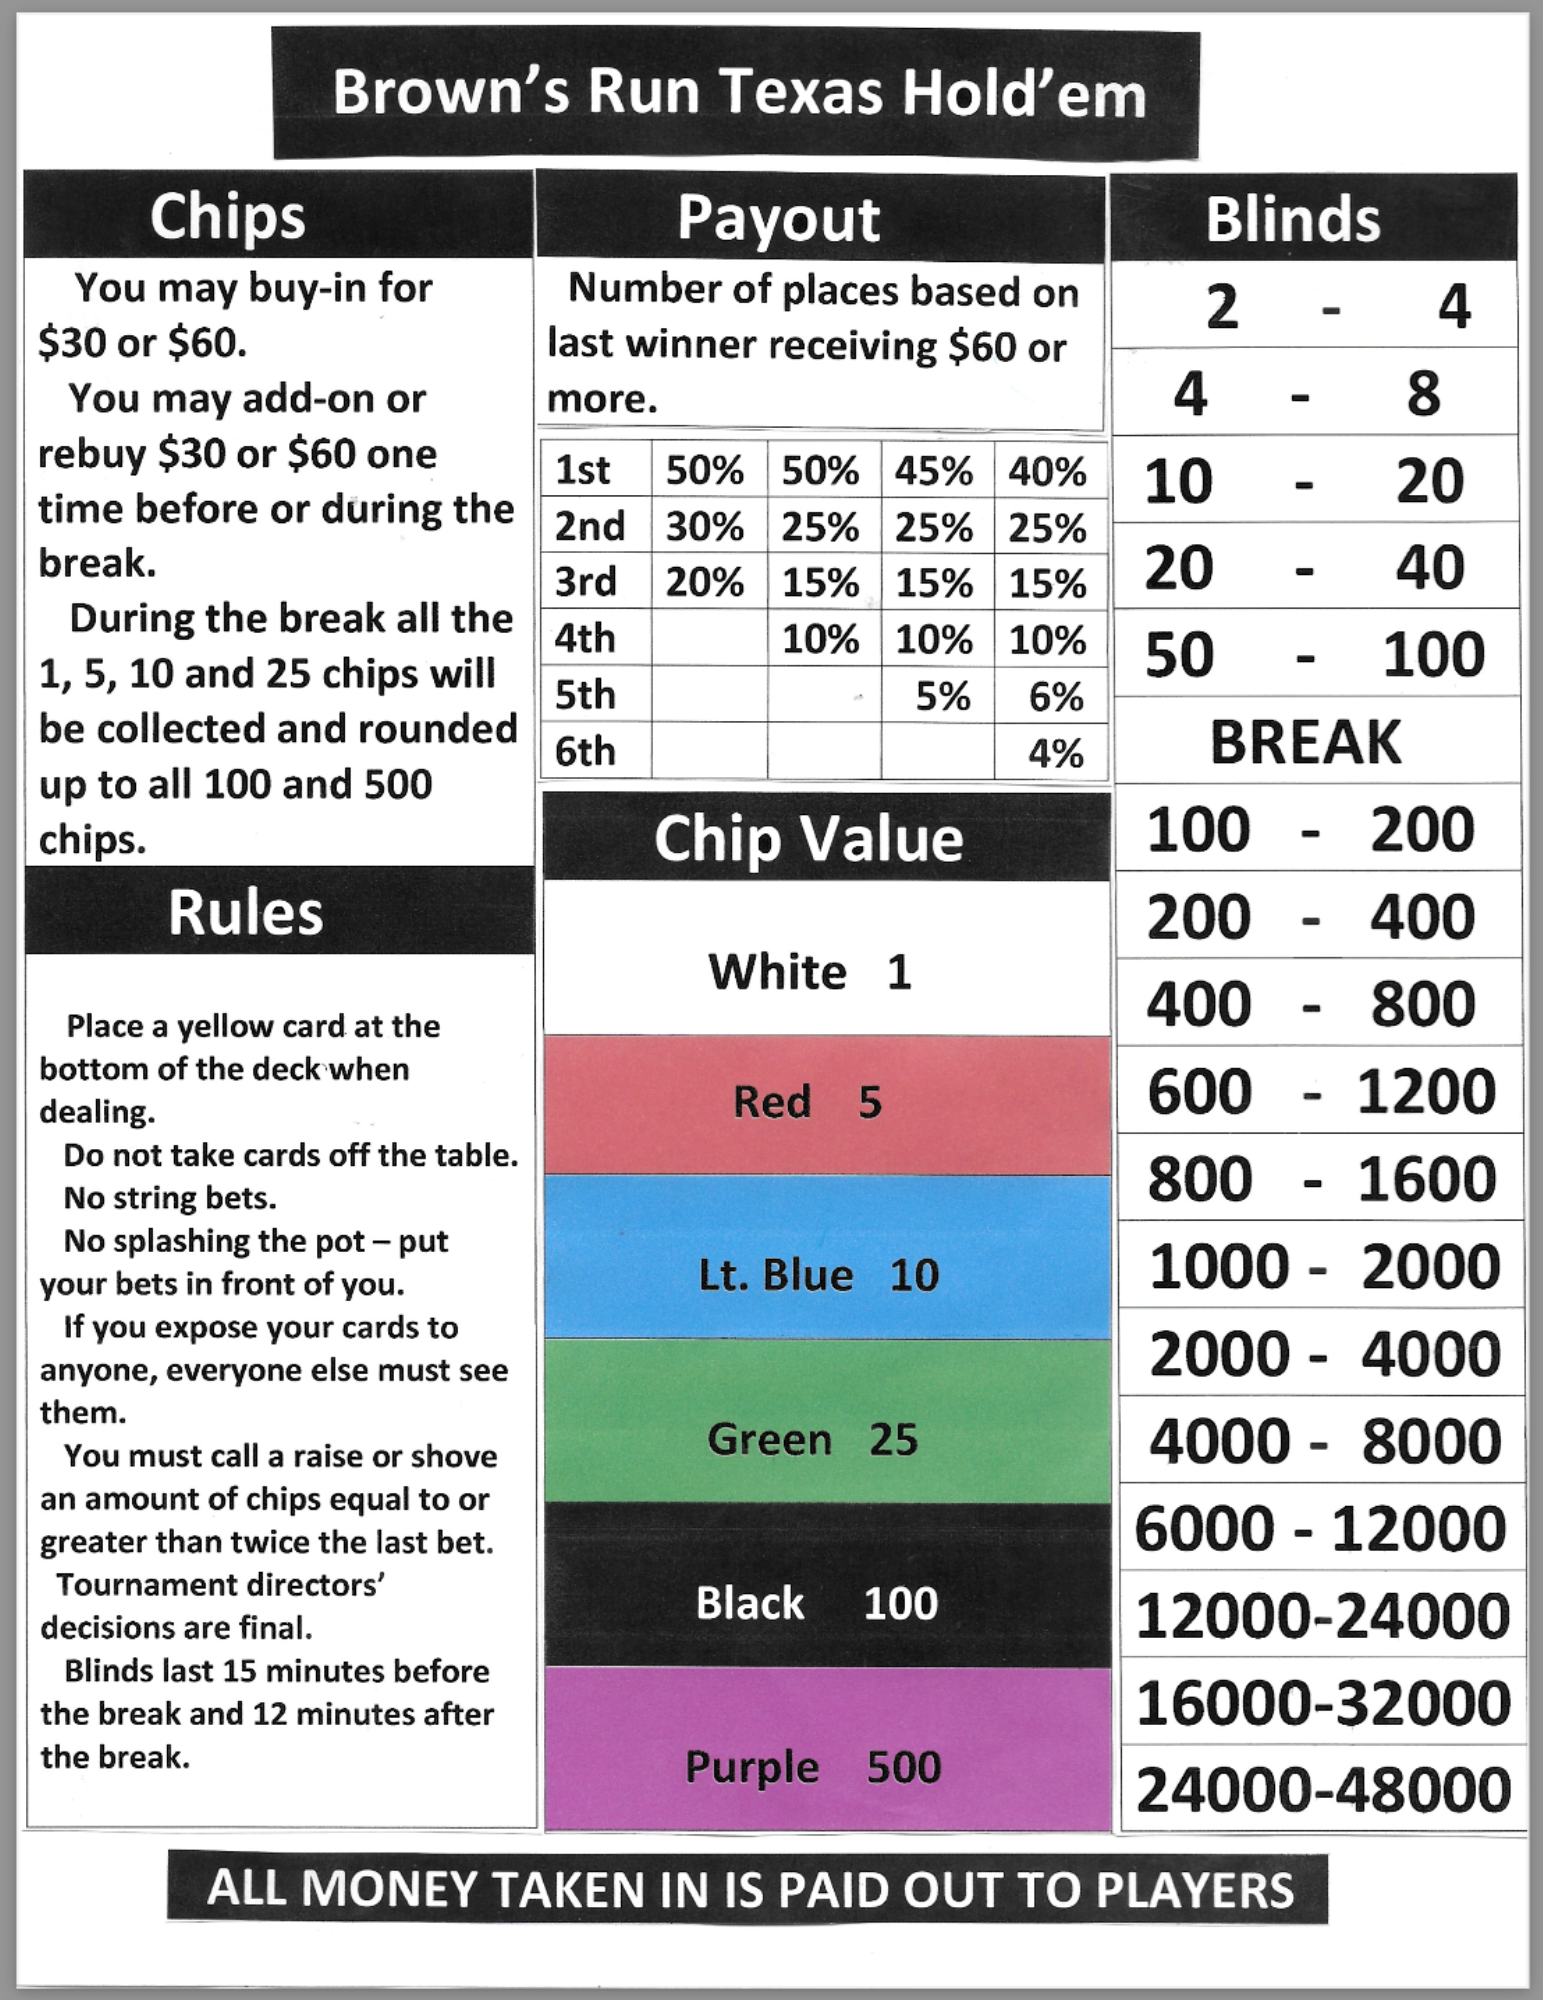 Browns Run Poker Rules 2.28